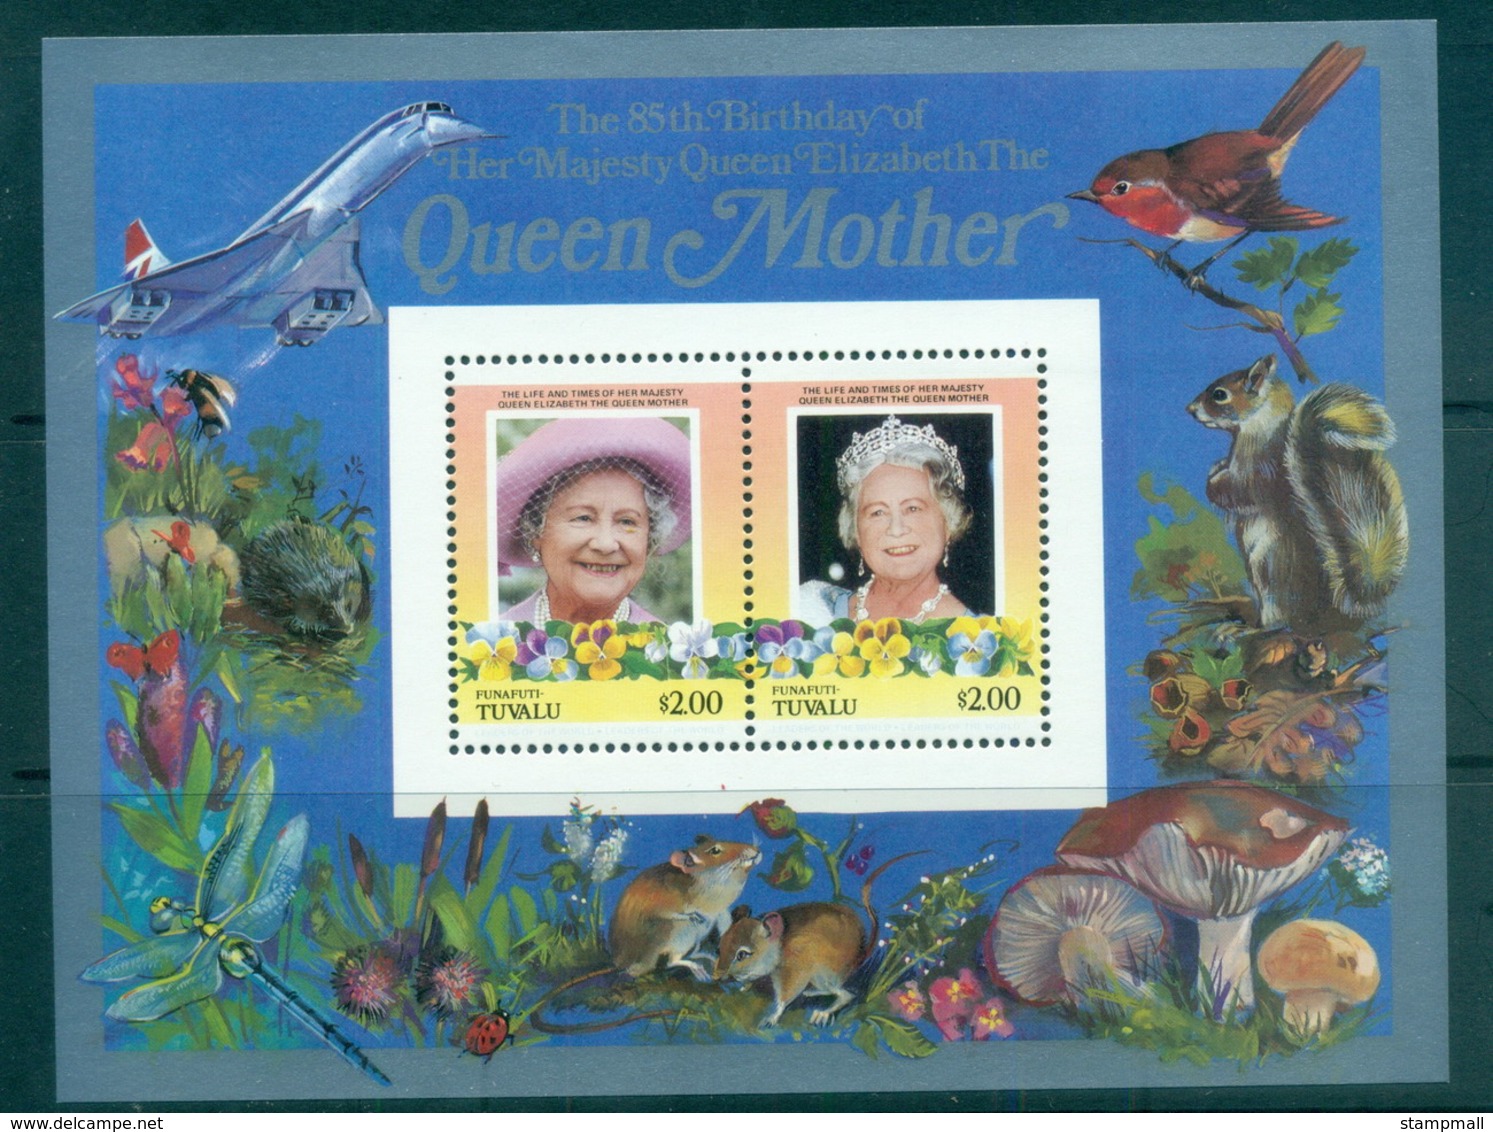 Tuvalu Funafuti 1986 Queen Mother 85th Birthday $2 MS MUH - Tuvalu